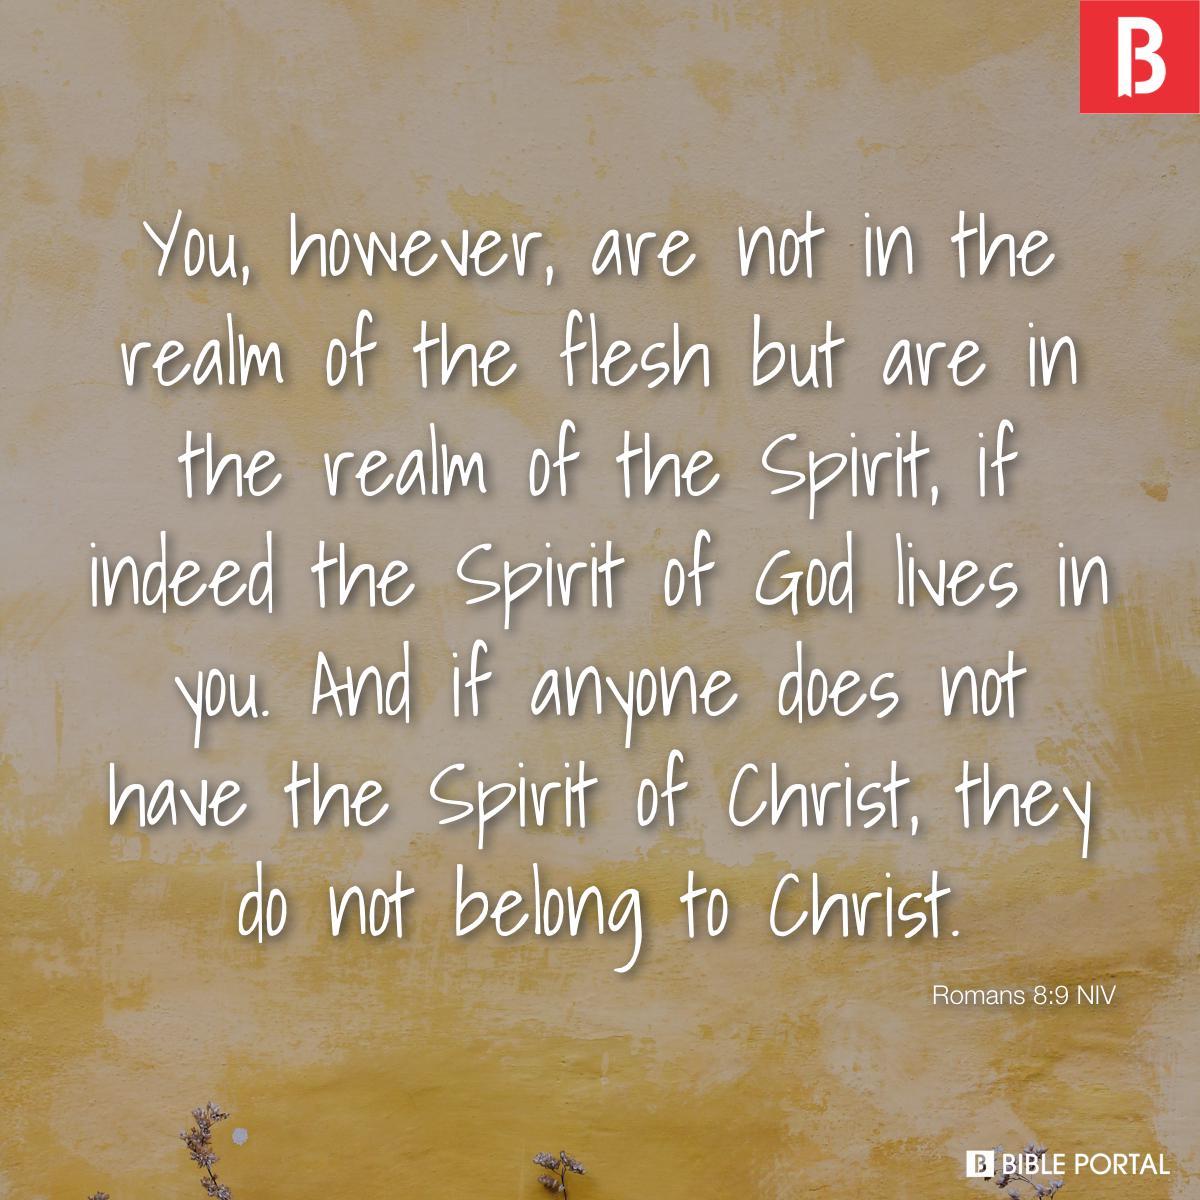 Romans 8:9 NIV